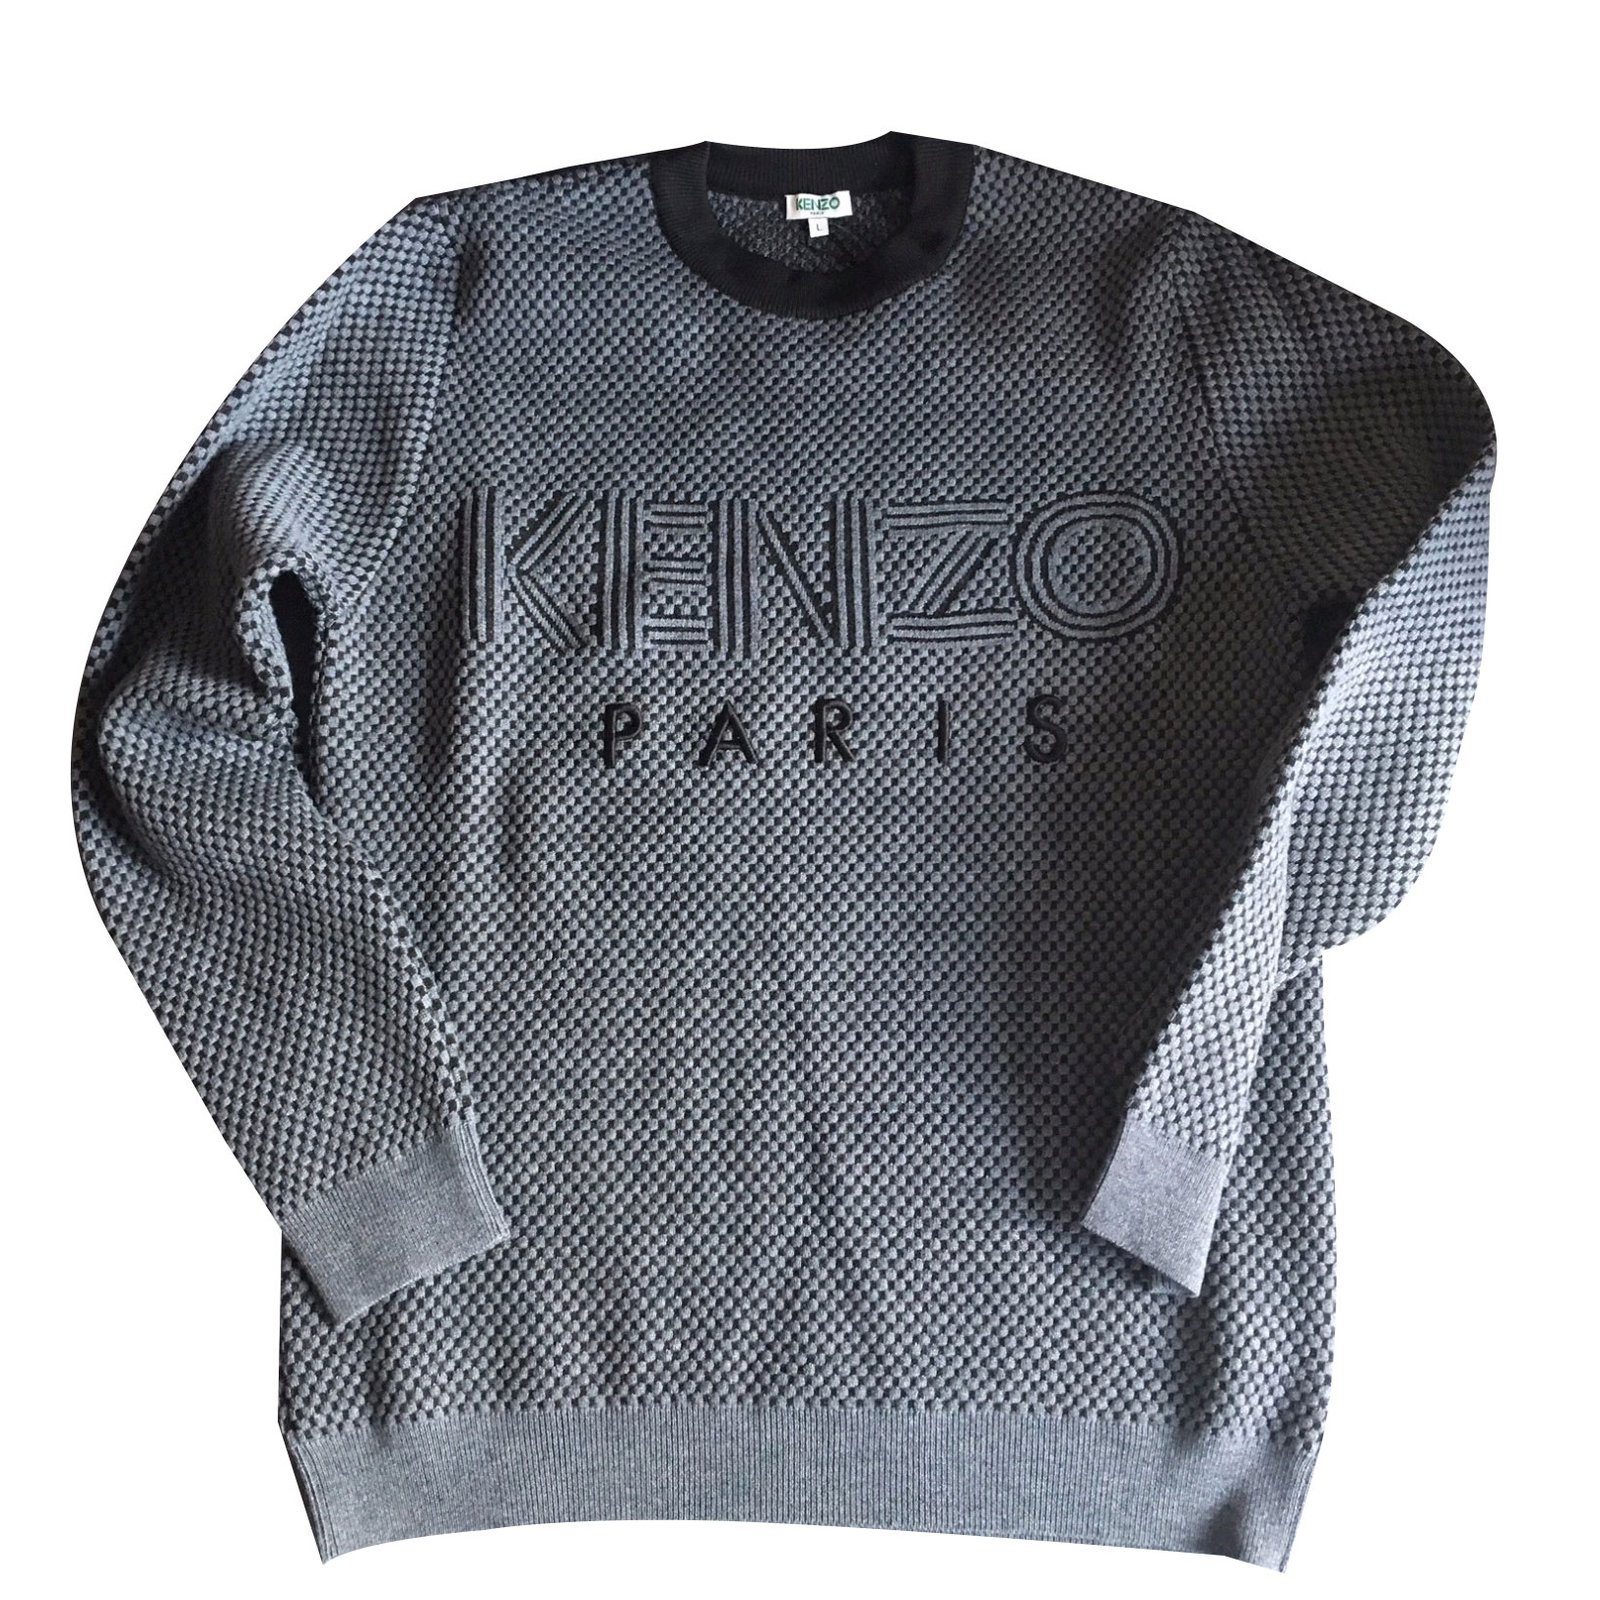 grey kenzo jumper